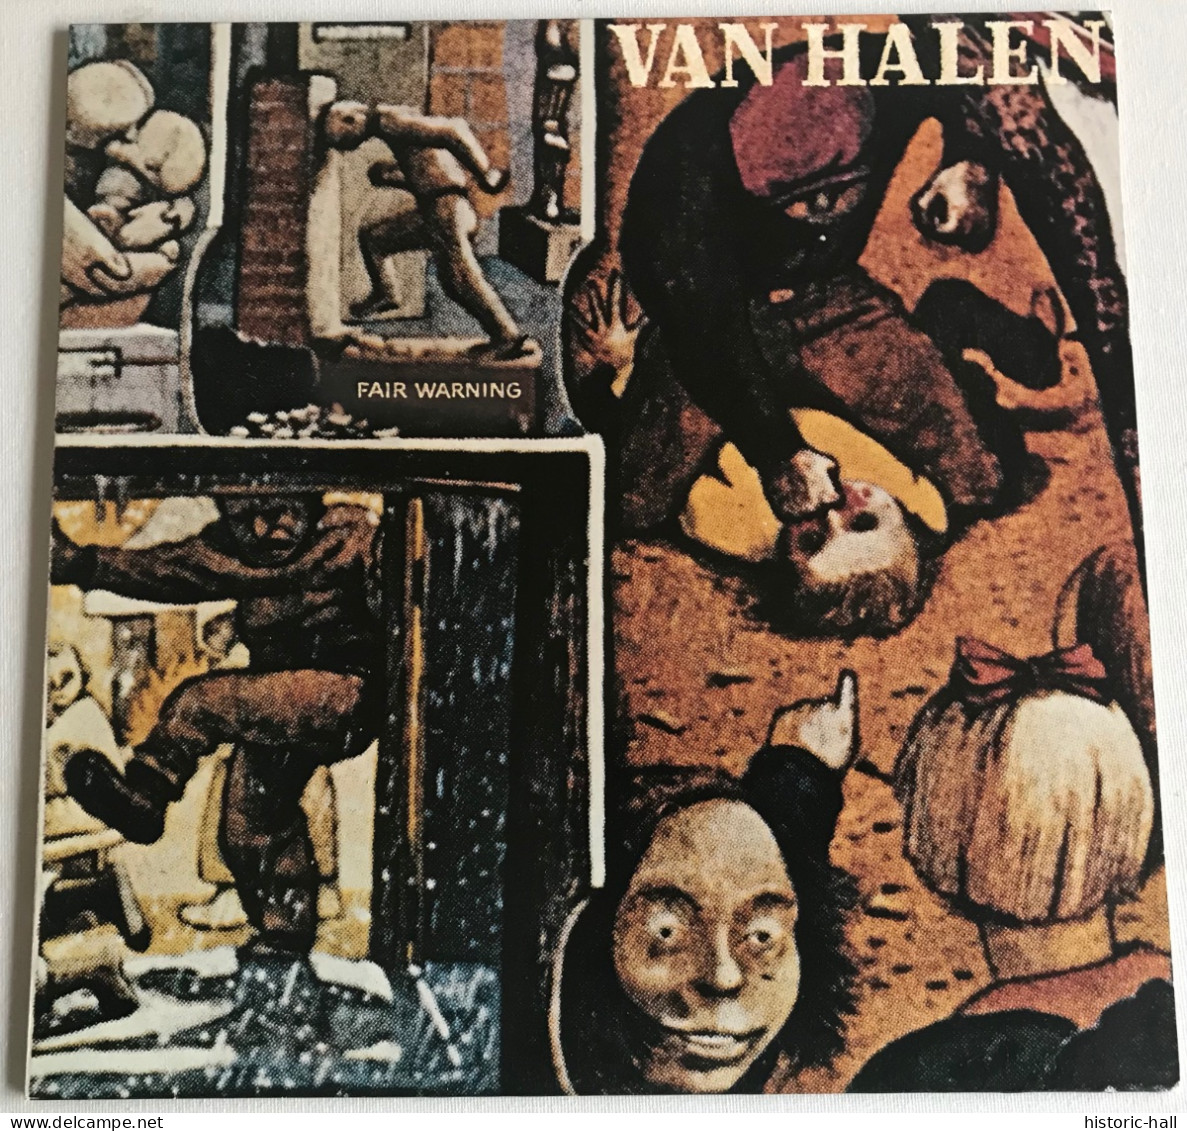 VAN HALEN - Fair Warning - LP - 1981 - German Press - Hard Rock En Metal